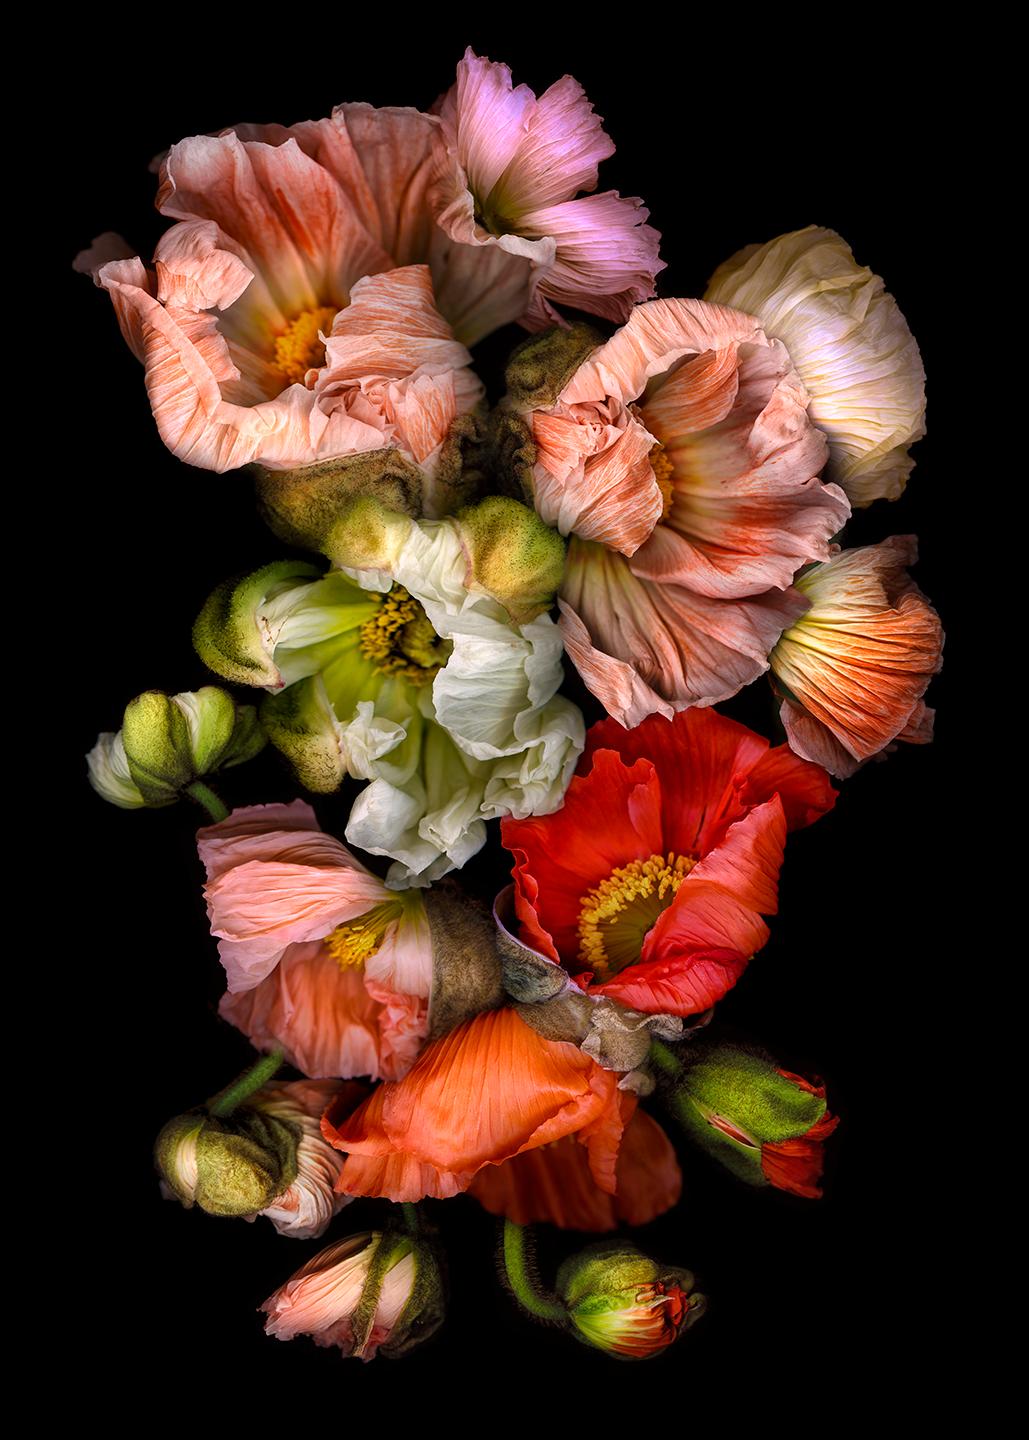 Allan Forsyth Color Photograph – Schwarze Pelze, dramatische Fotografie, lebhafte florale Kunstwerke, Chromagenic-Druck